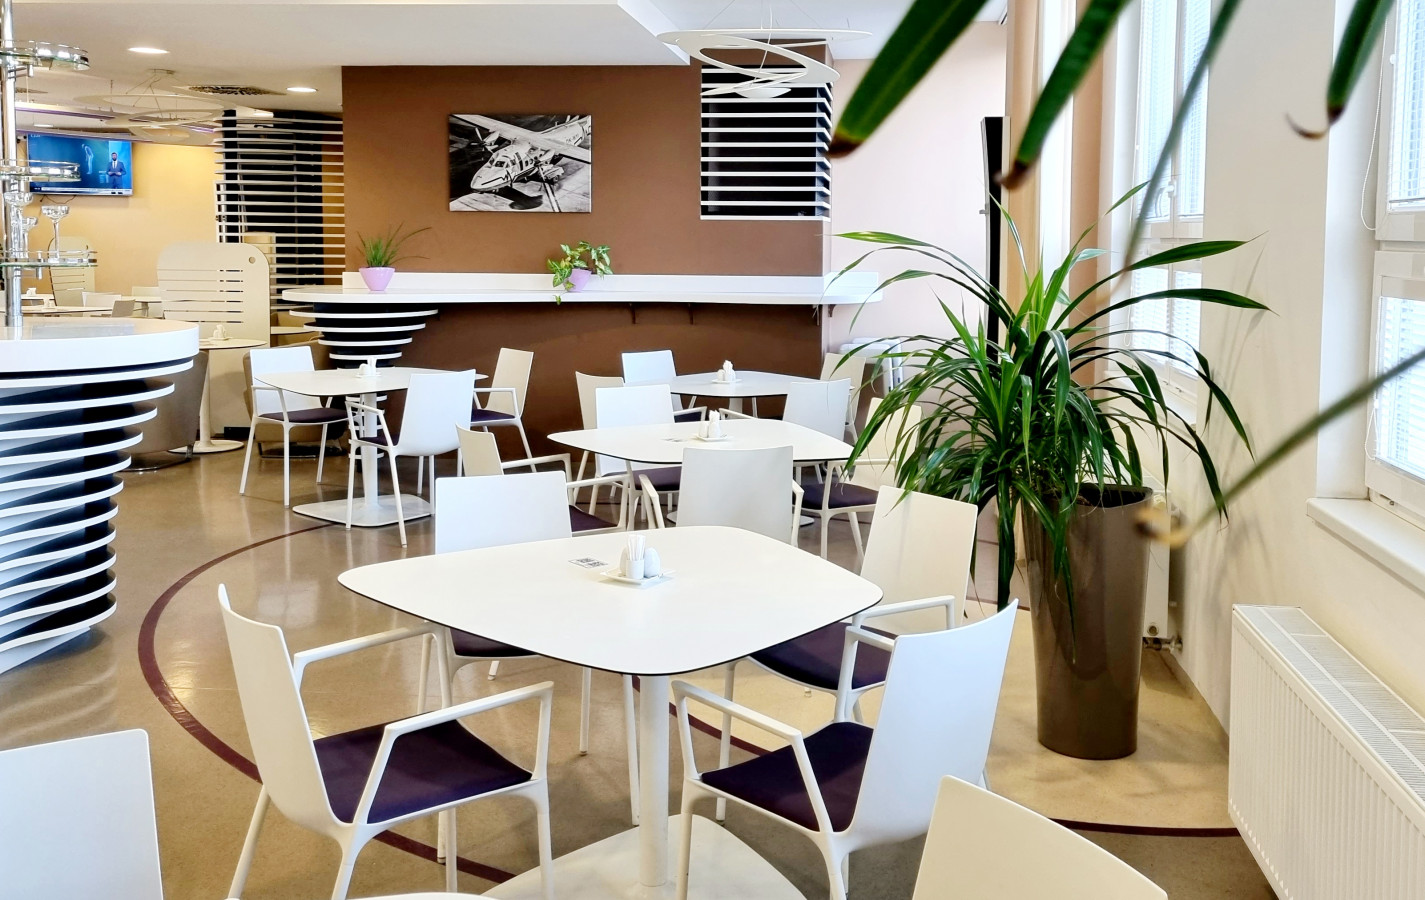 Restaurace Air Club  Praha 6 - kvalitní gastronomie a přátelská atmosféra